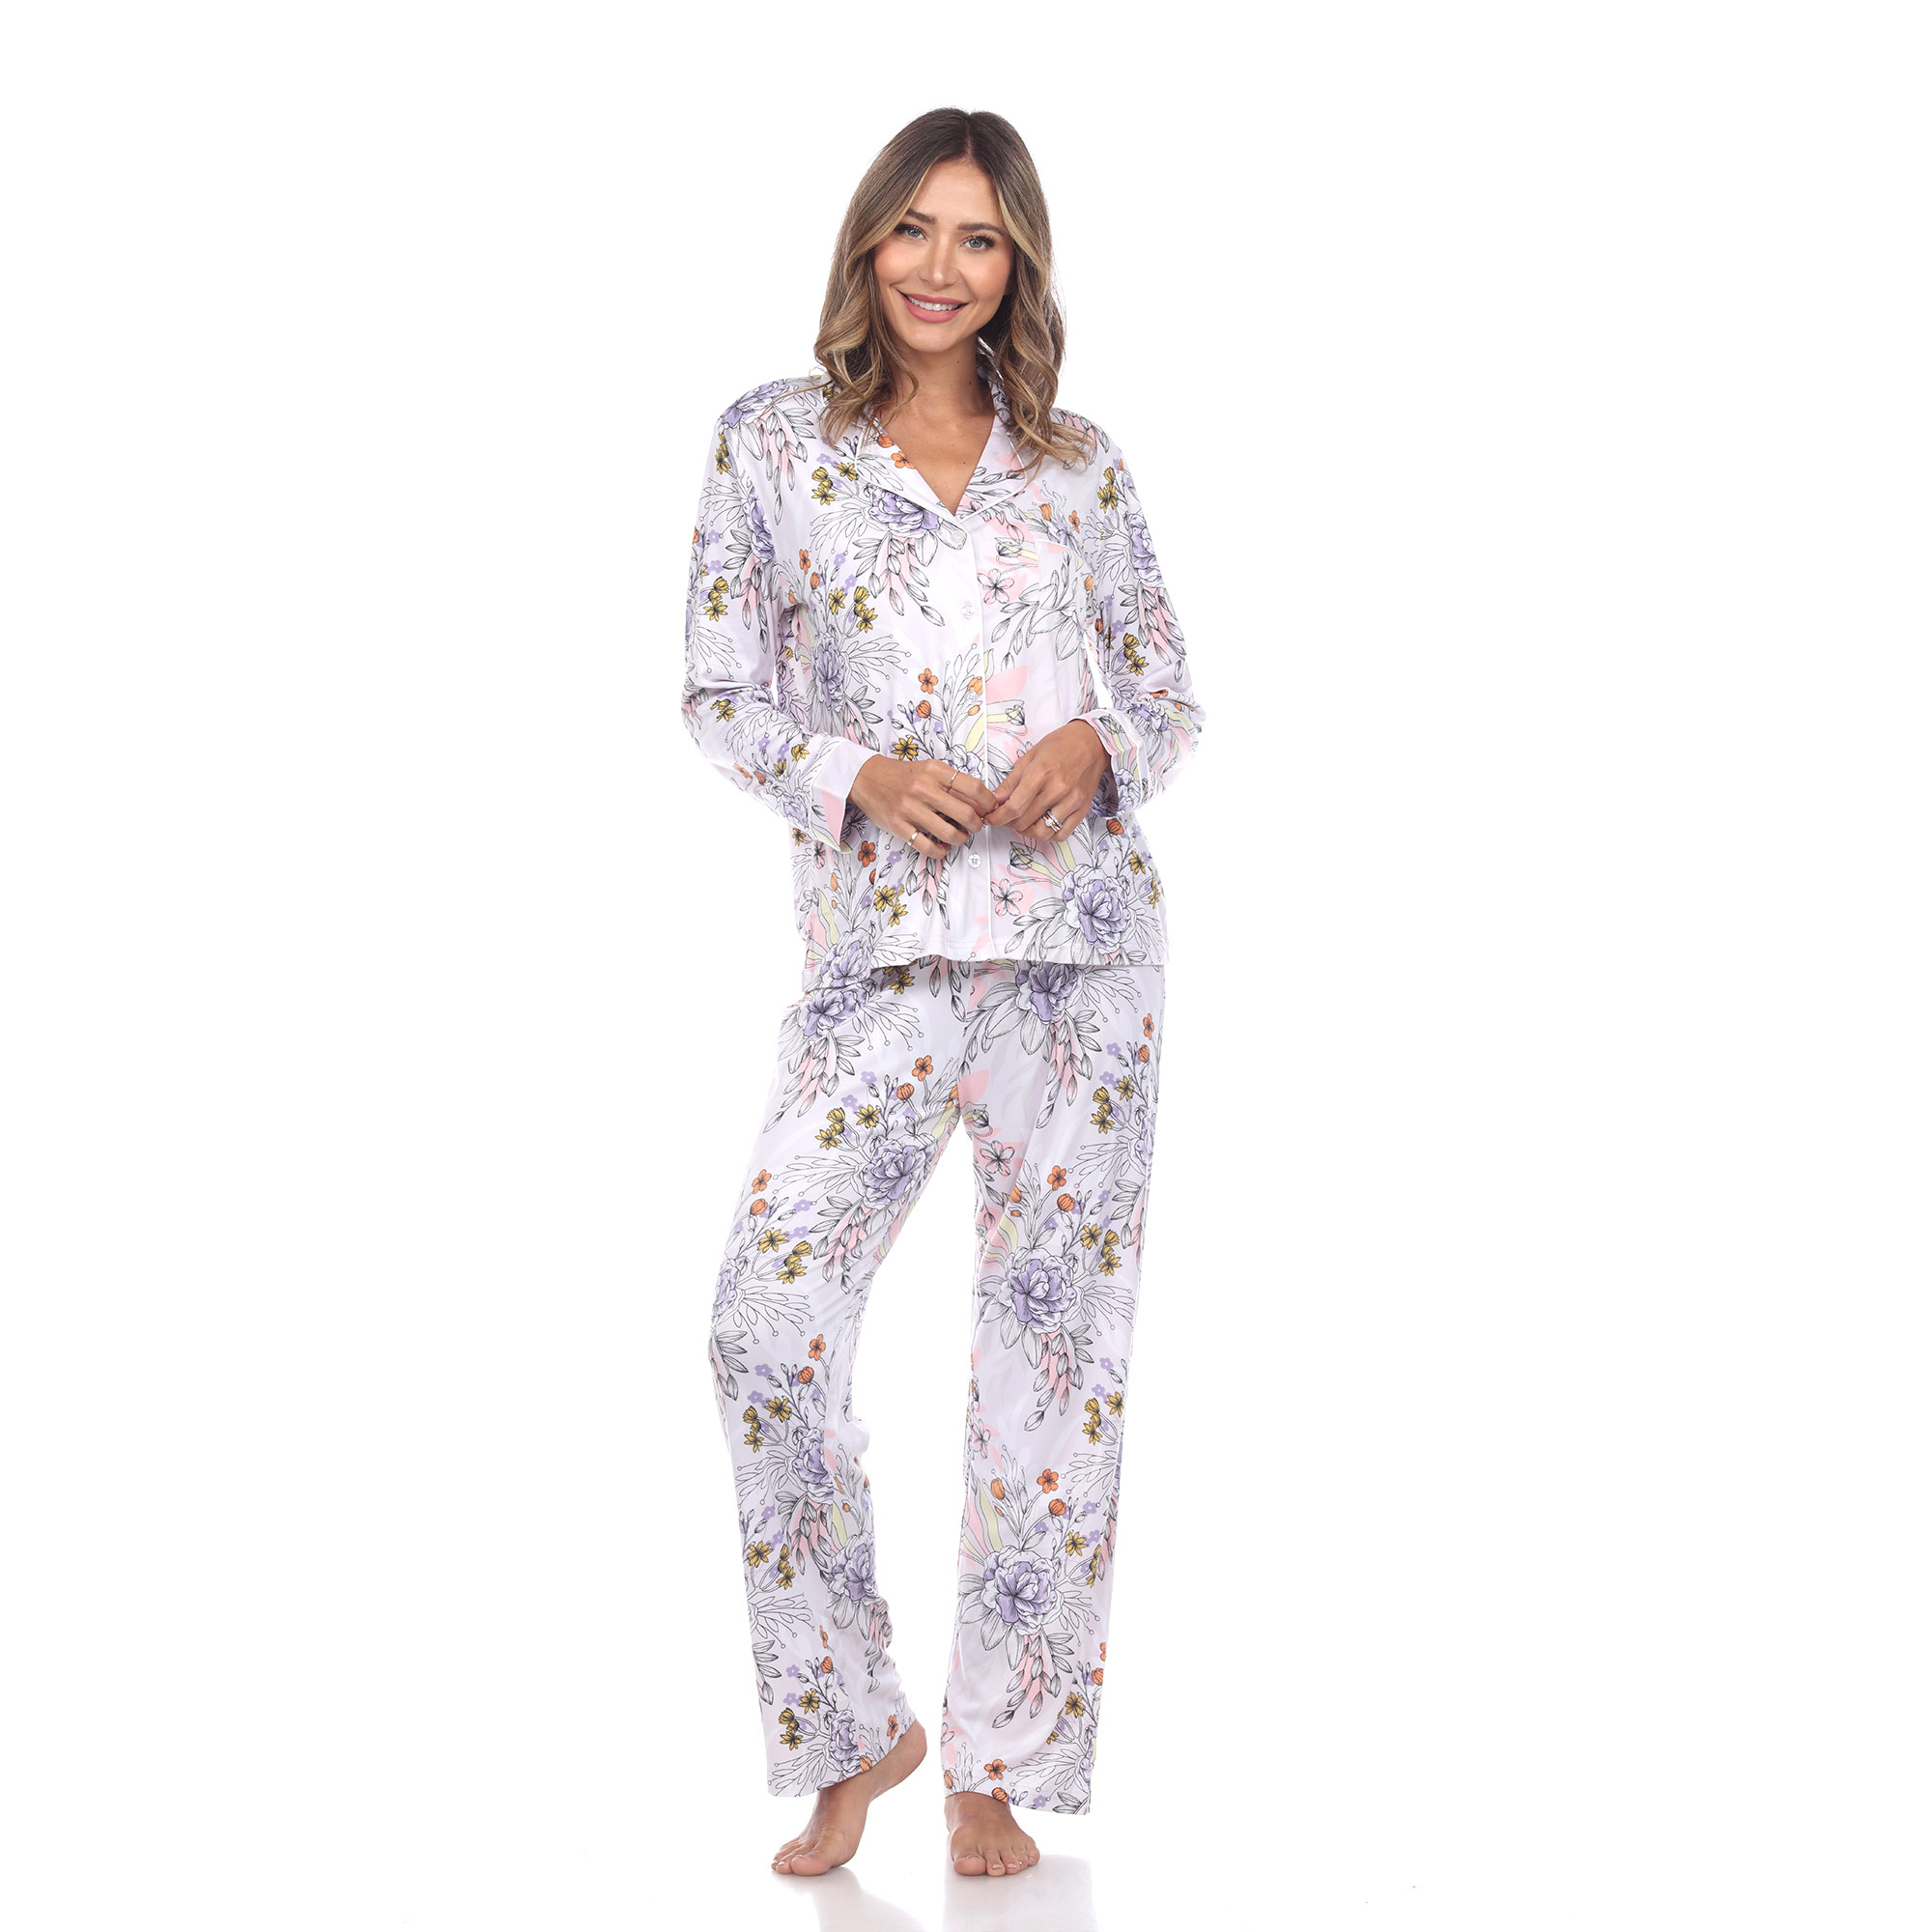 White Mark Women's Long Sleeve Floral Pajama Set - Lavender, 2X